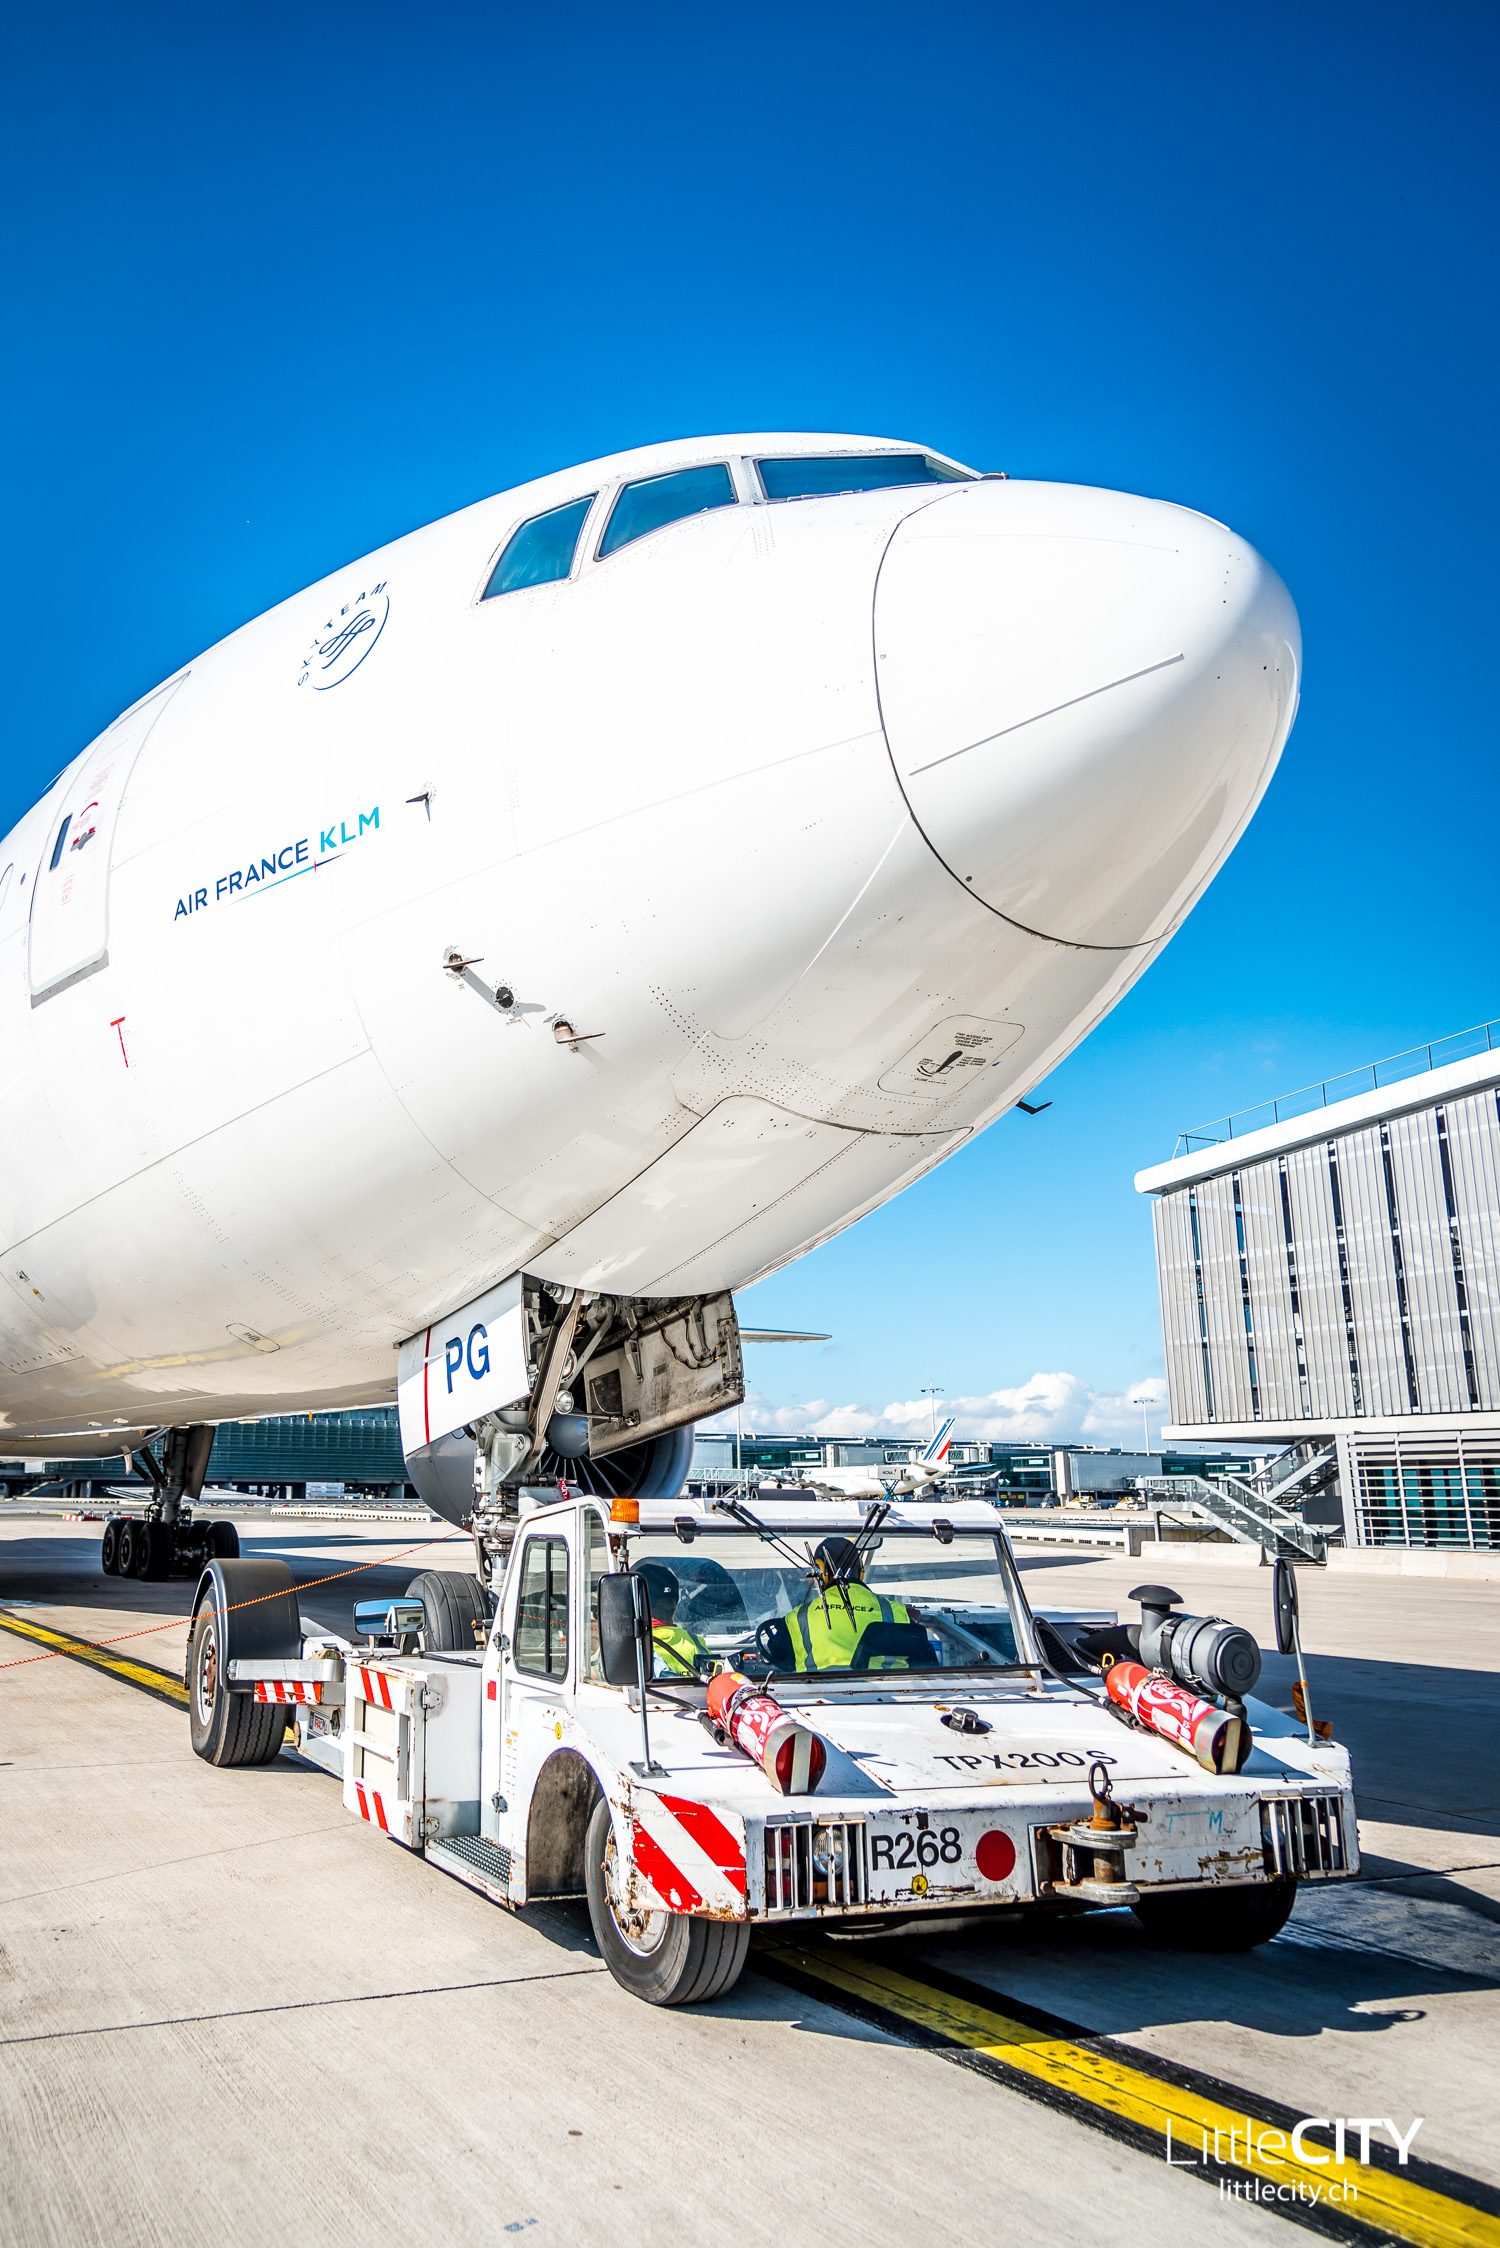 Air France KLM Boeing 777 Pushback - Behind the Scenes at CDG Paris